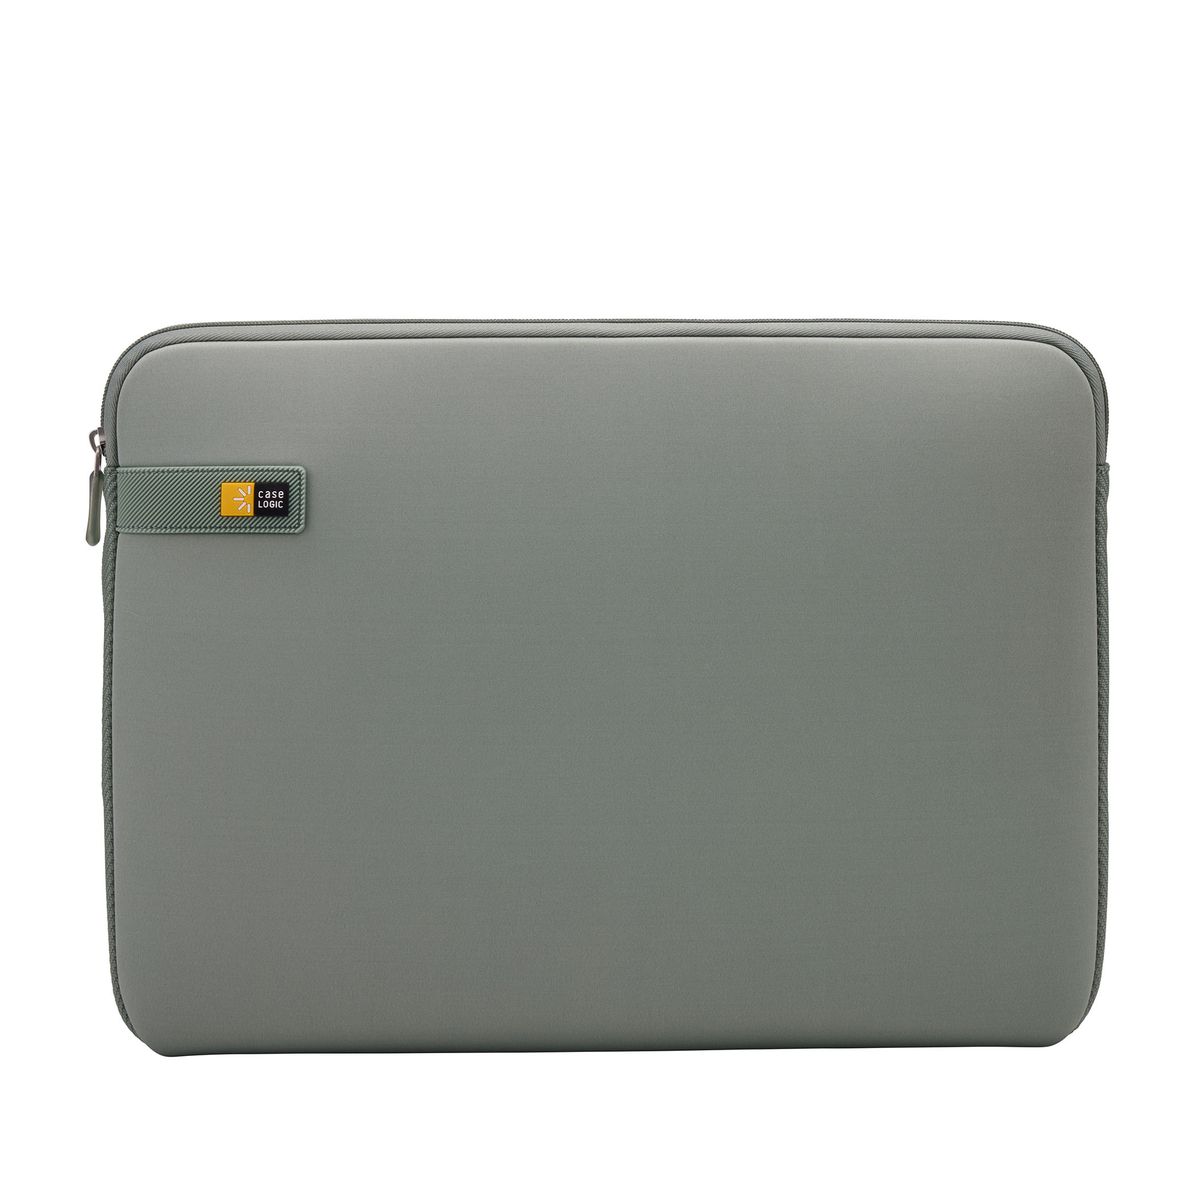 Case Logic 14" Laptop Sleeve Ramble Green - Front